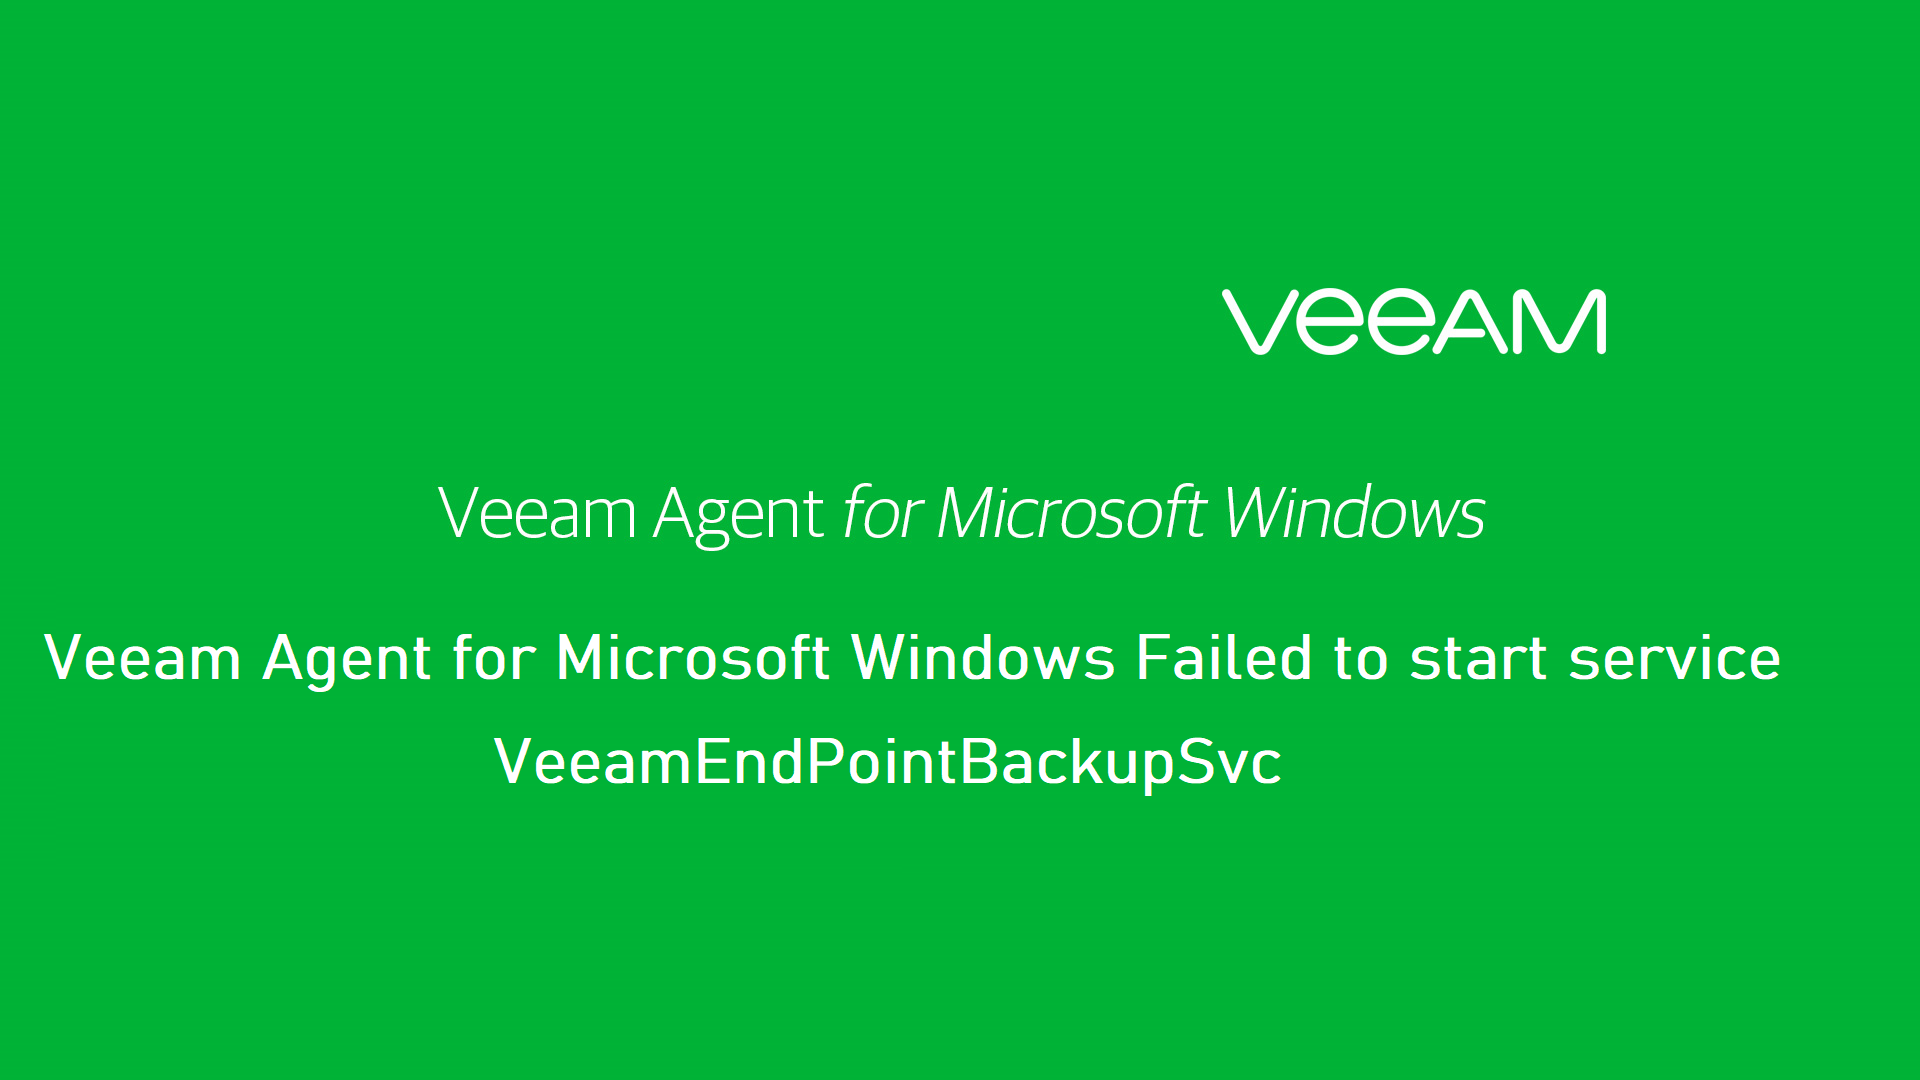 Veeam Agent for Microsoft Windows Failed to start service VeeamEndPointBackupSvc